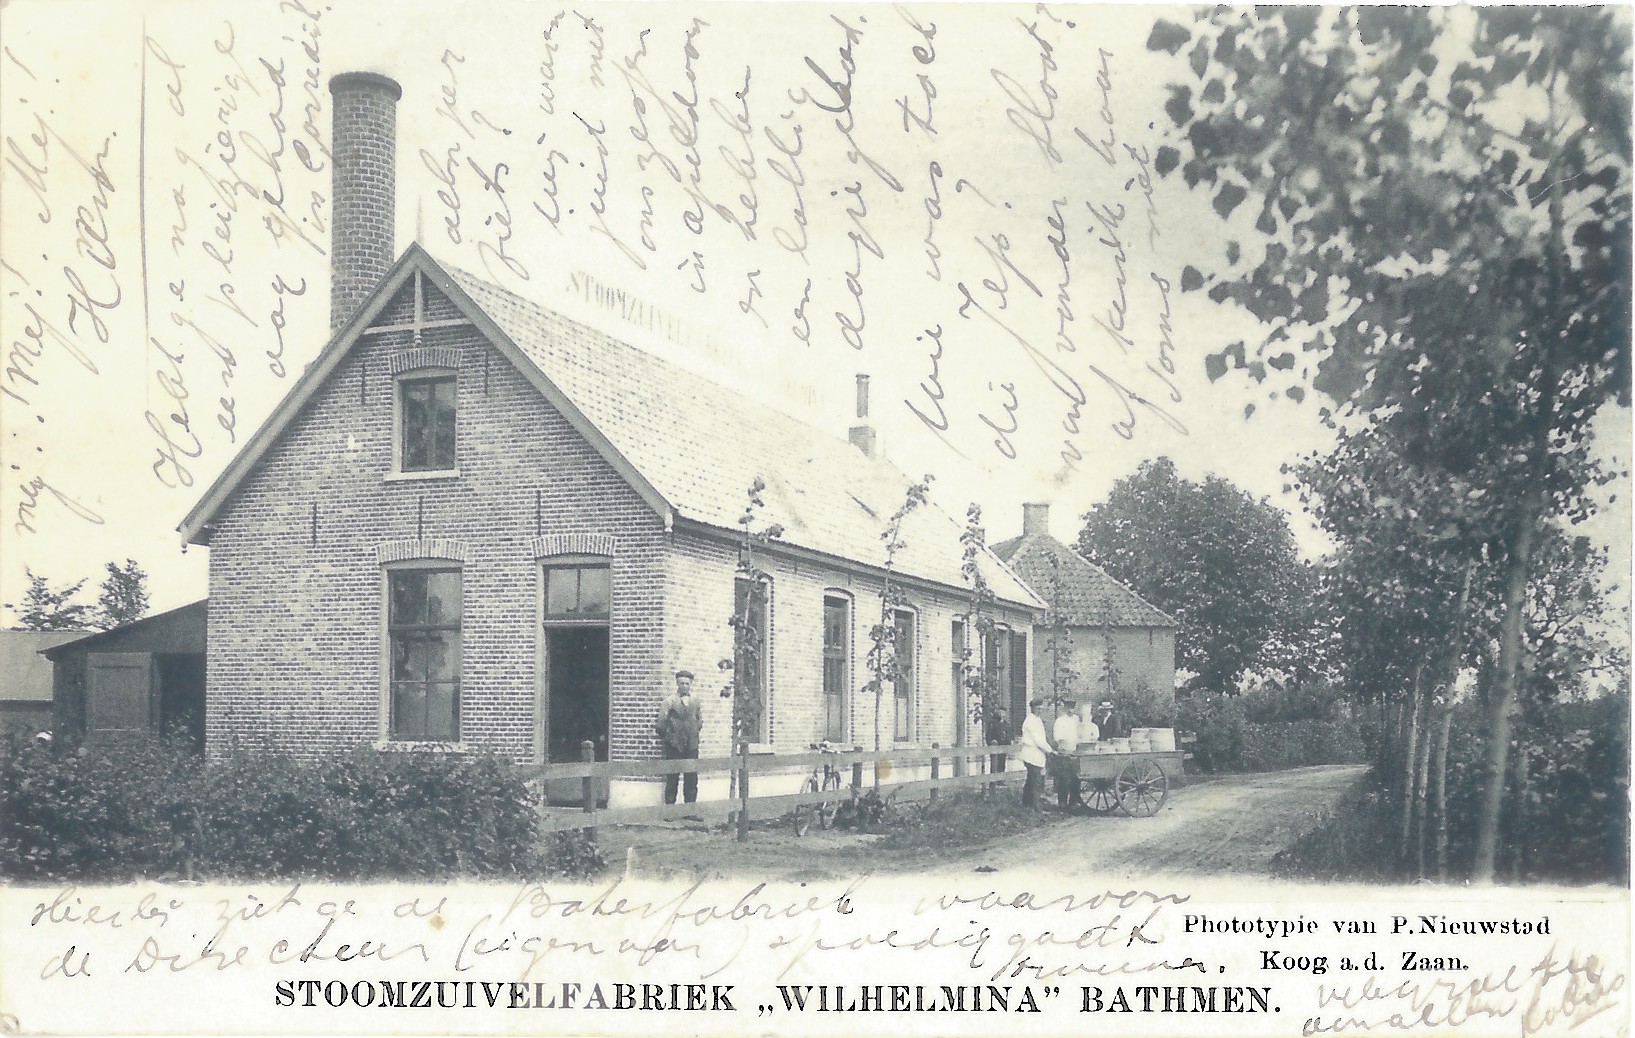 Bathmen stoomzuivelfabriek Wilhelmina